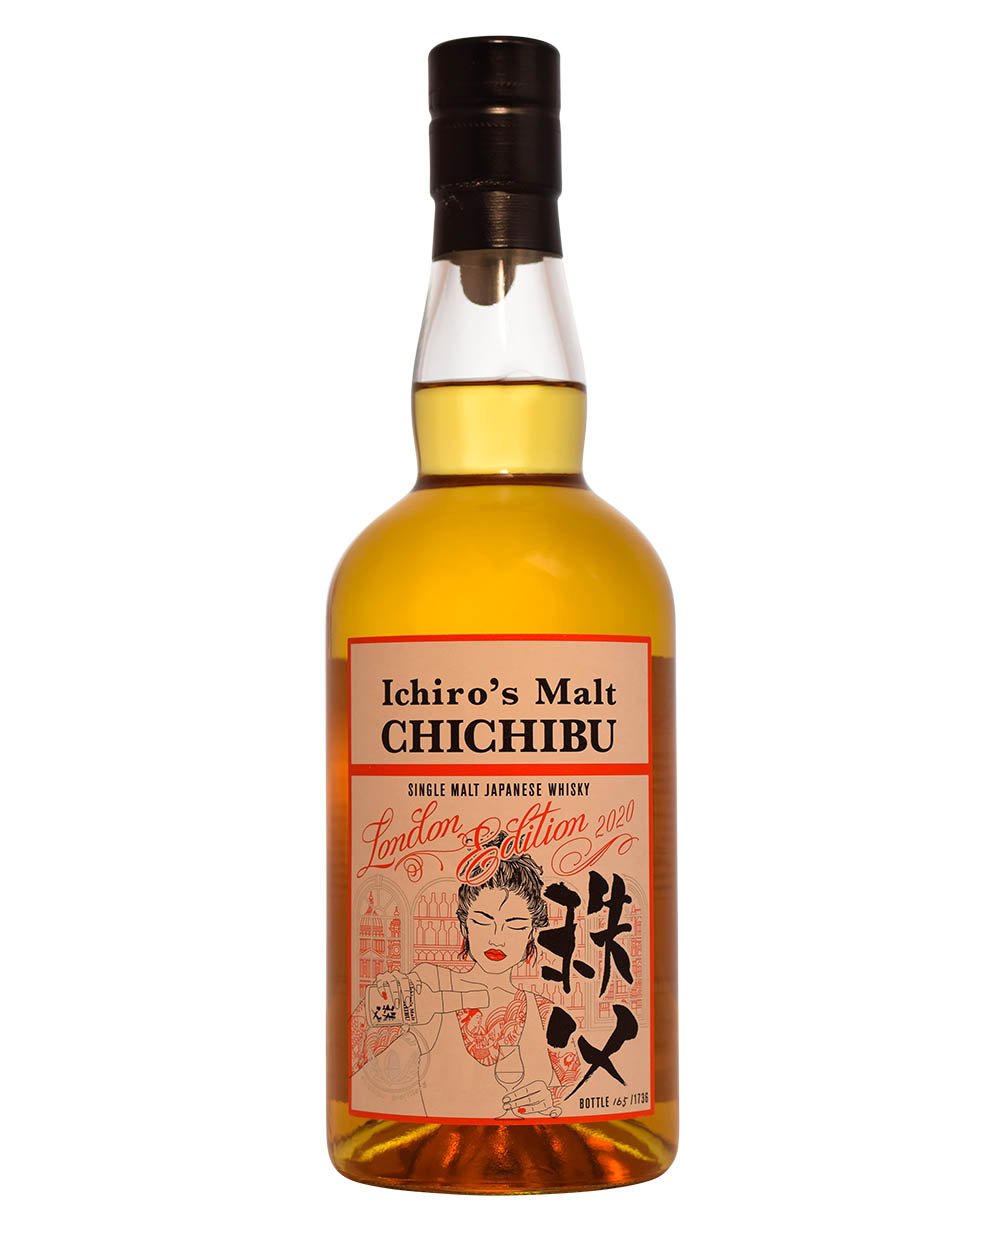 Ichiro's Malt Chichibu London Edition 2020 Musthave Malts MHM